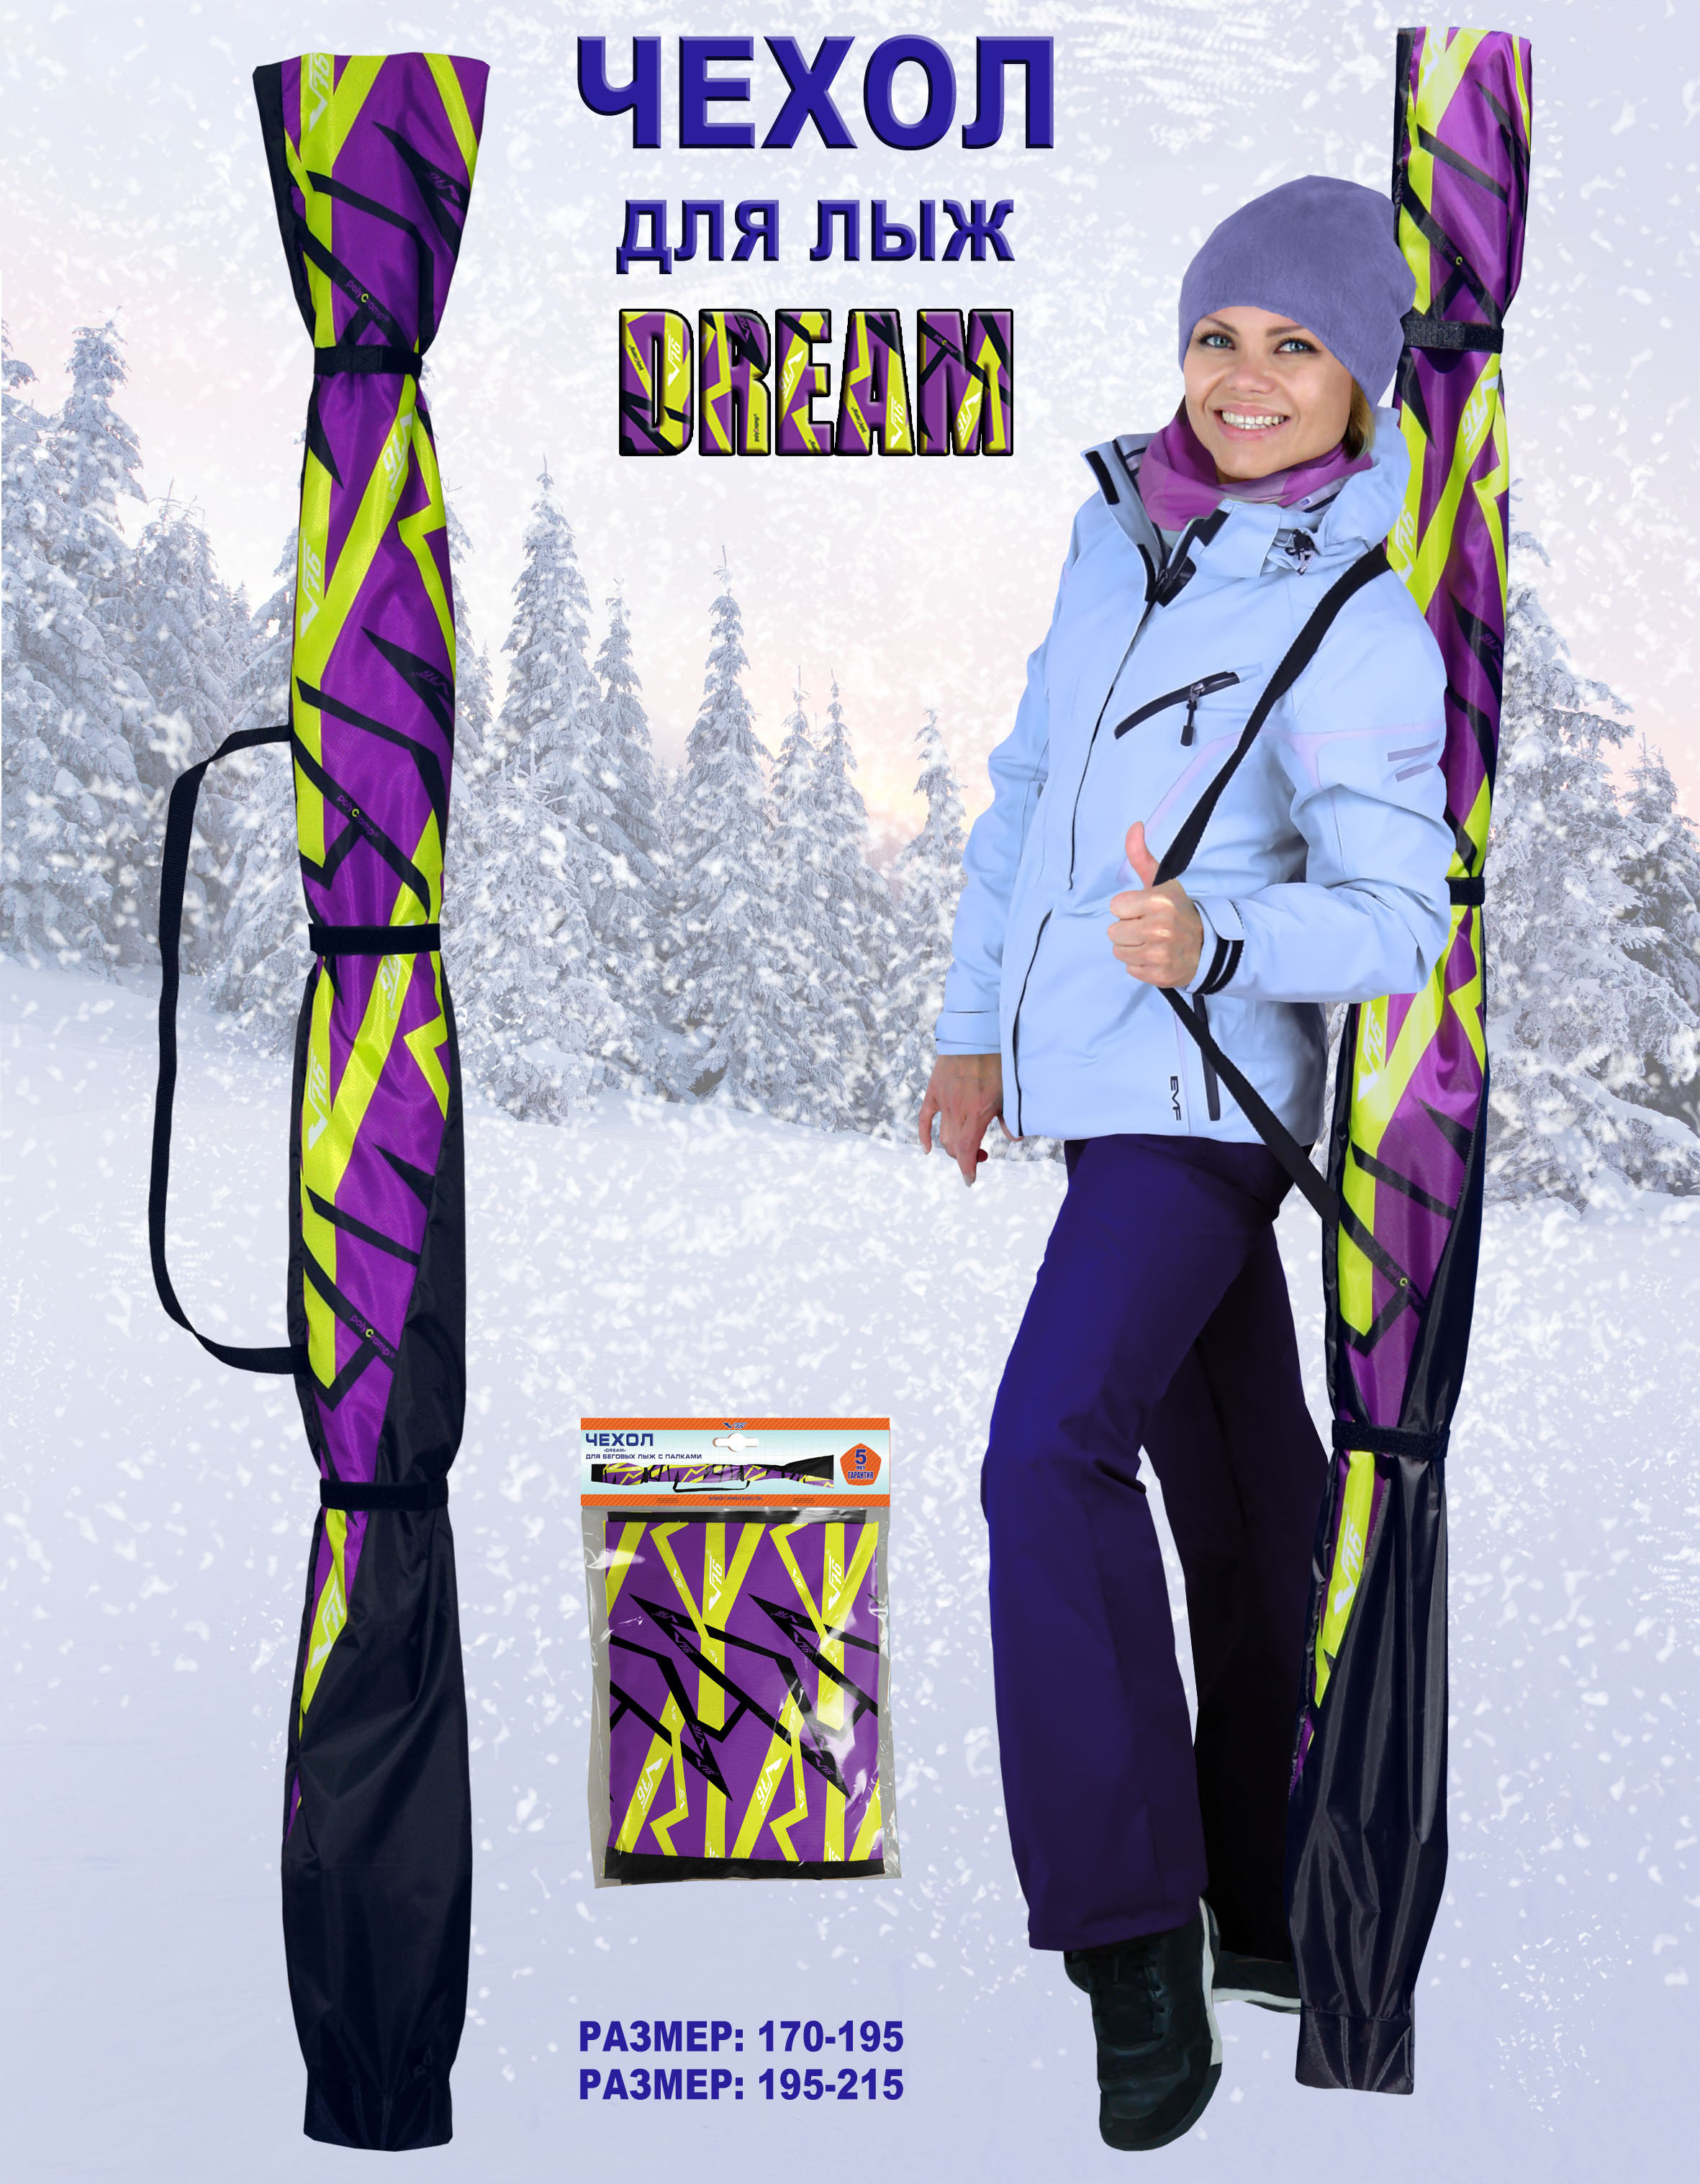 чехол для лыж (ski bag)